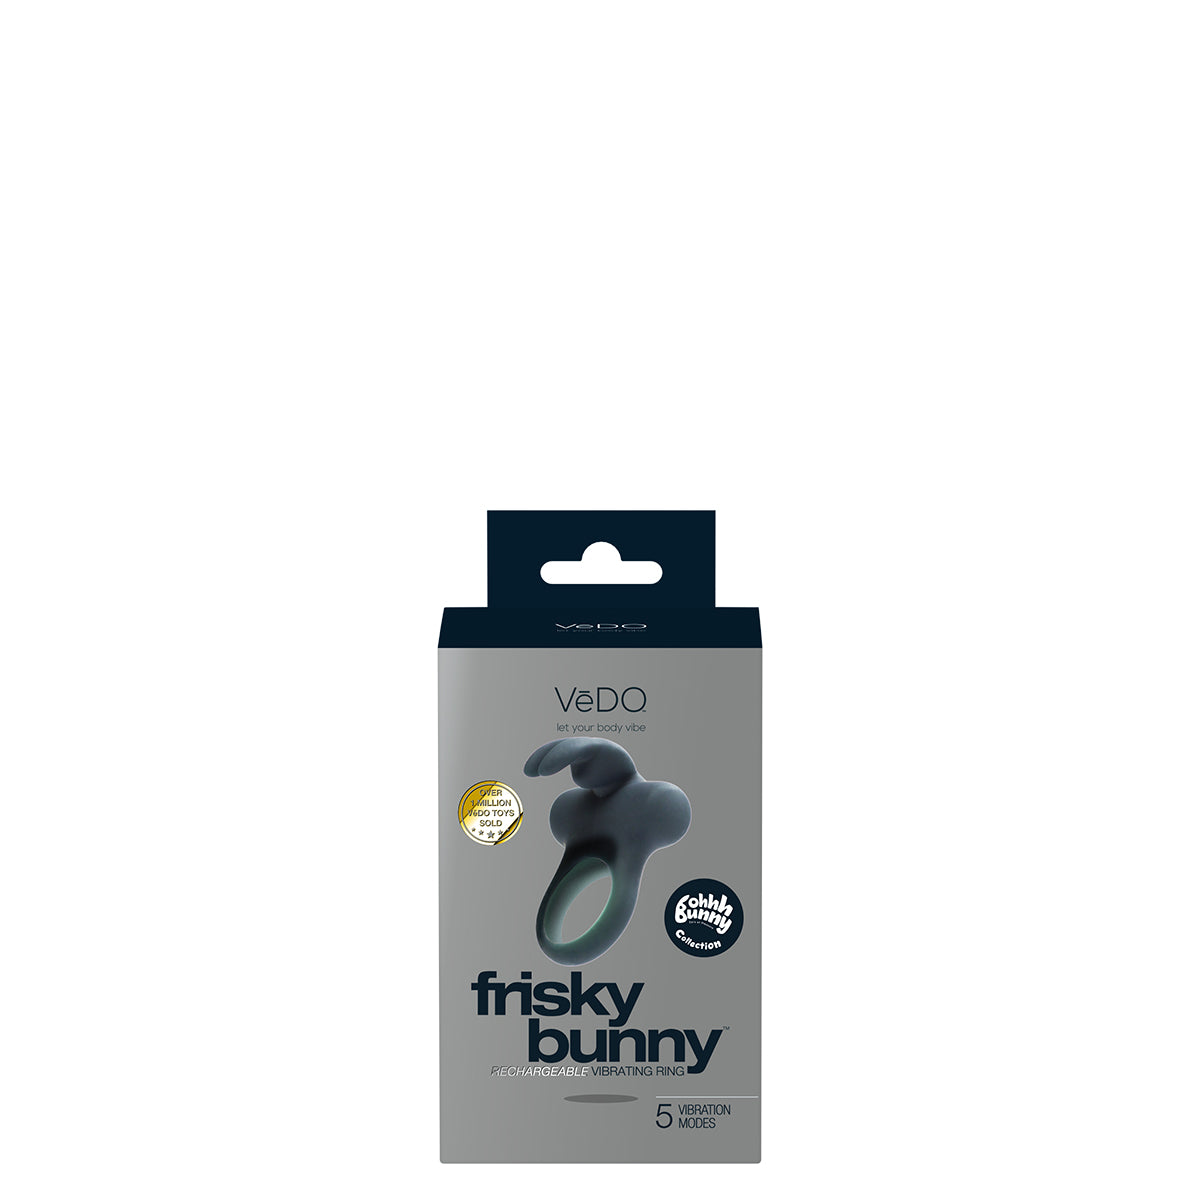 VeDO Frisky Bunny - Black Intimates Adult Boutique